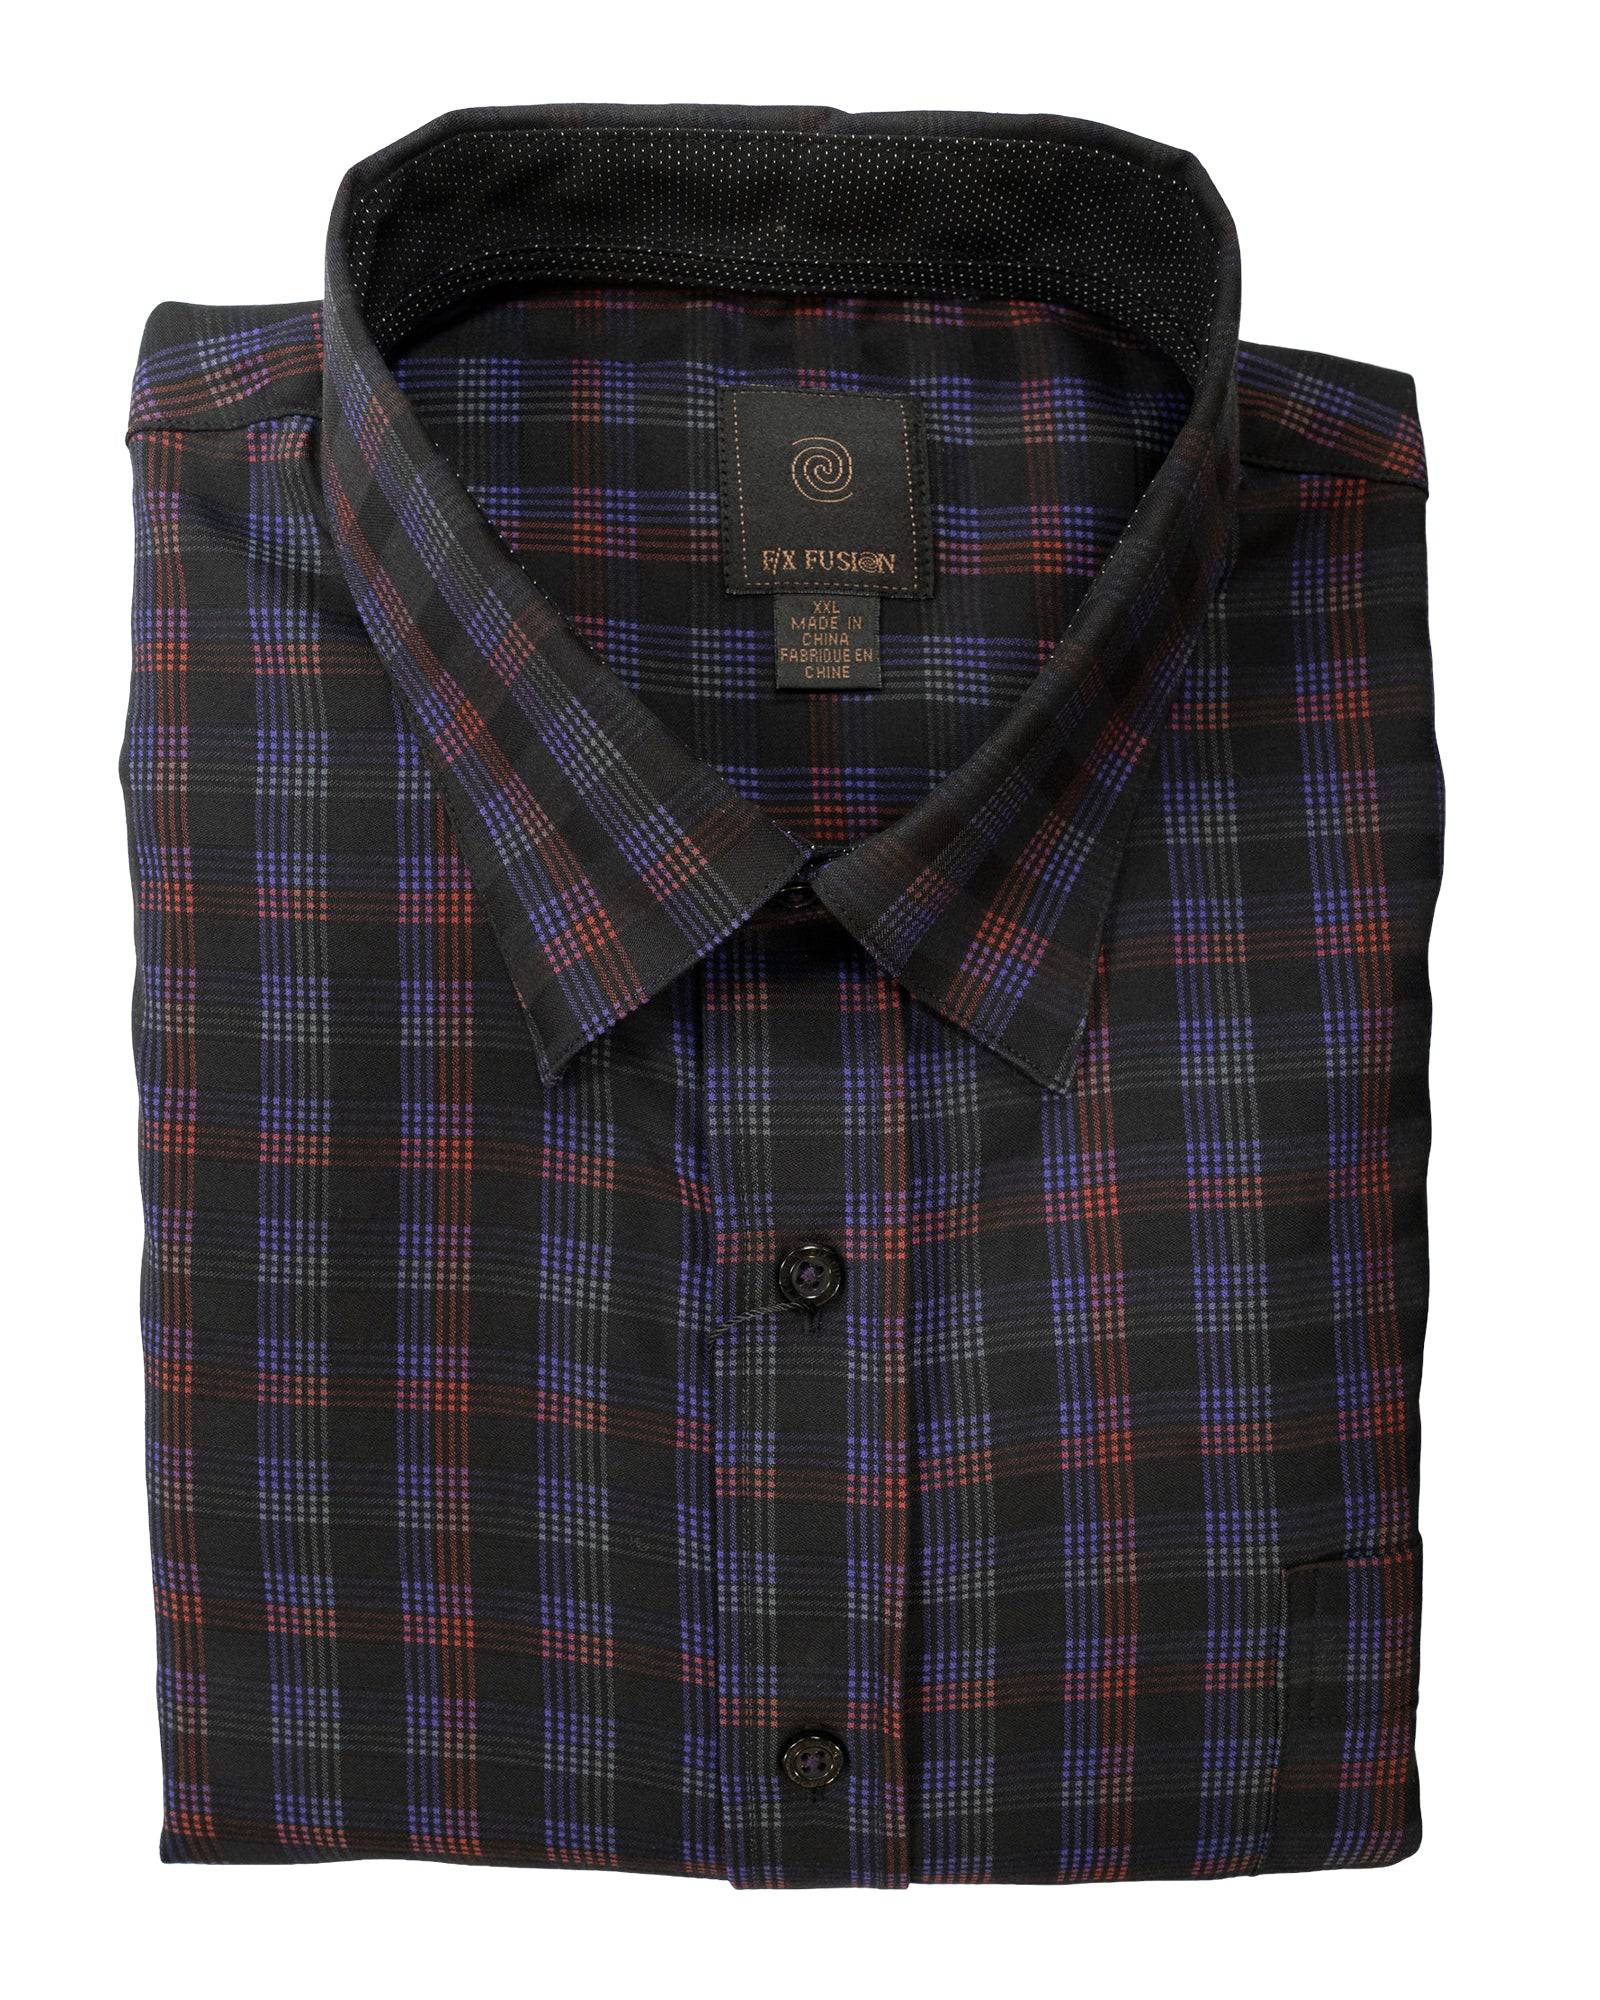 Black Multi-Colored Grid Sport Shirt - Rainwater's Men's Clothing and Tuxedo Rental